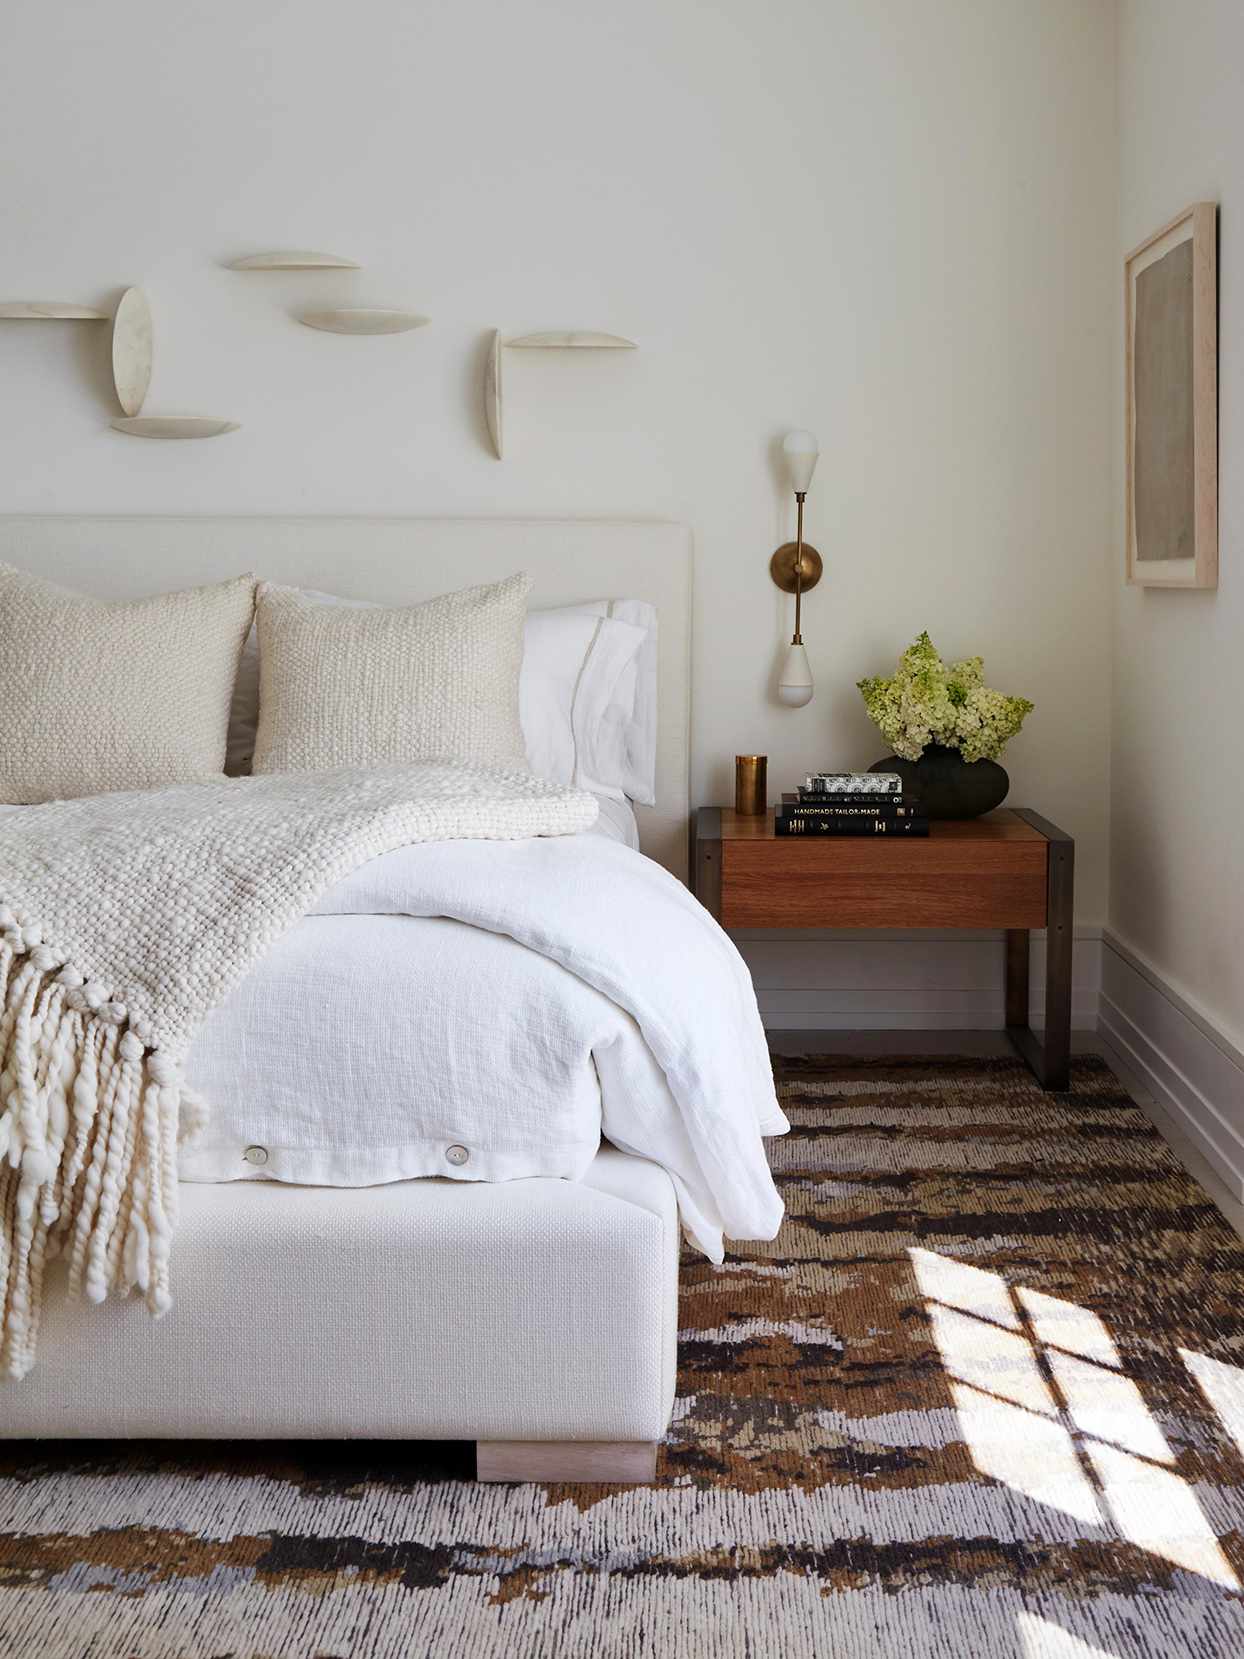 21 White Bedroom Ideas for a Serene Space | Better Homes & Gardens